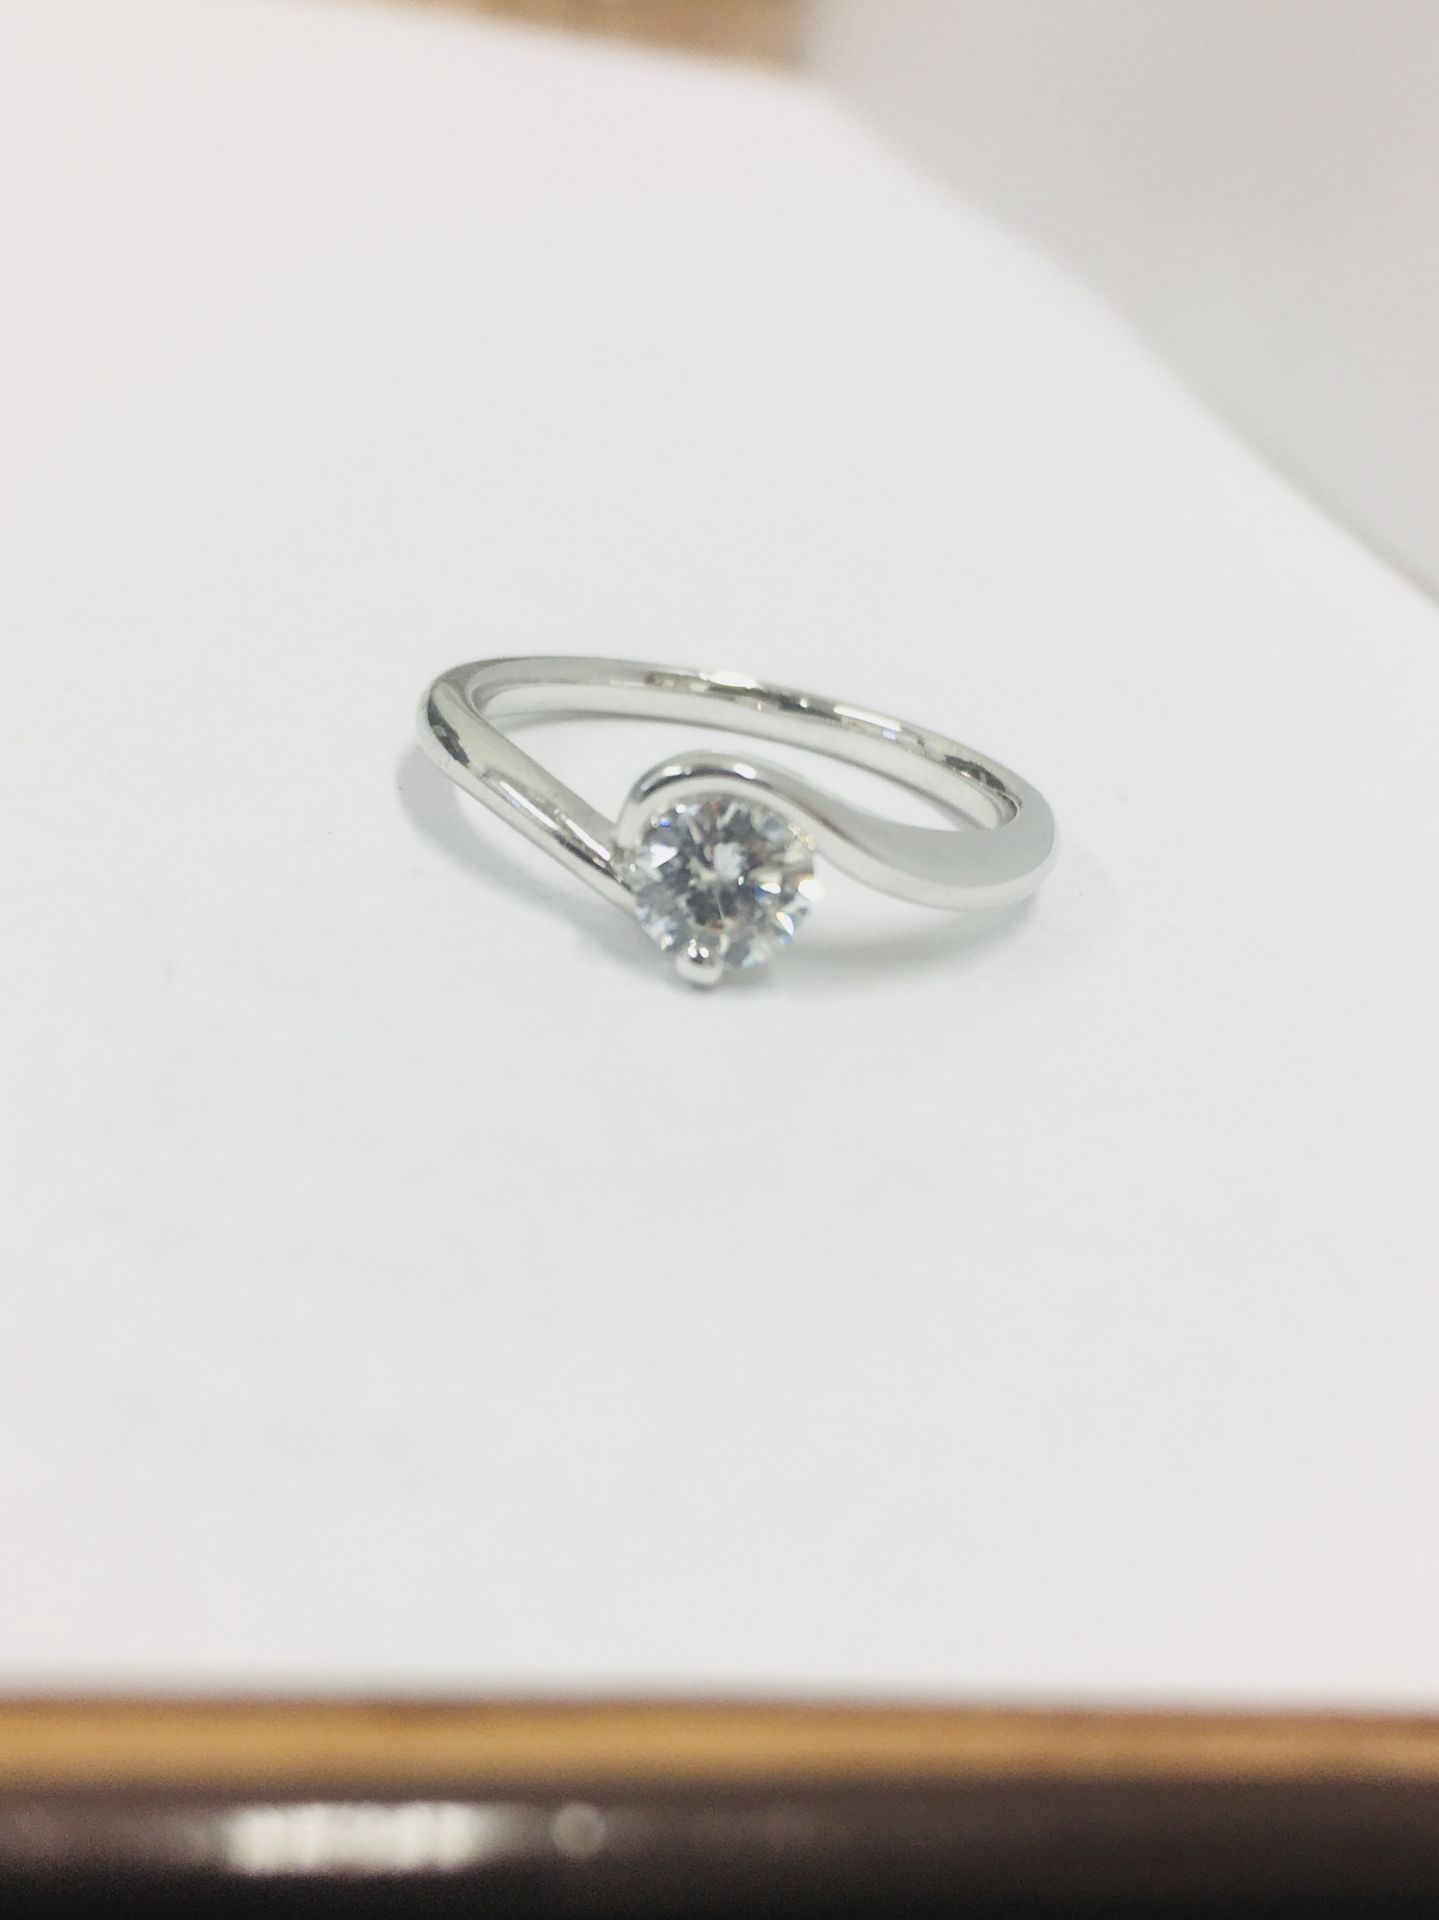 Platinum twist style diamond solitaire ring,0.50ct D colour vs clarity diamond,4.68gms platinum,uk - Image 7 of 7